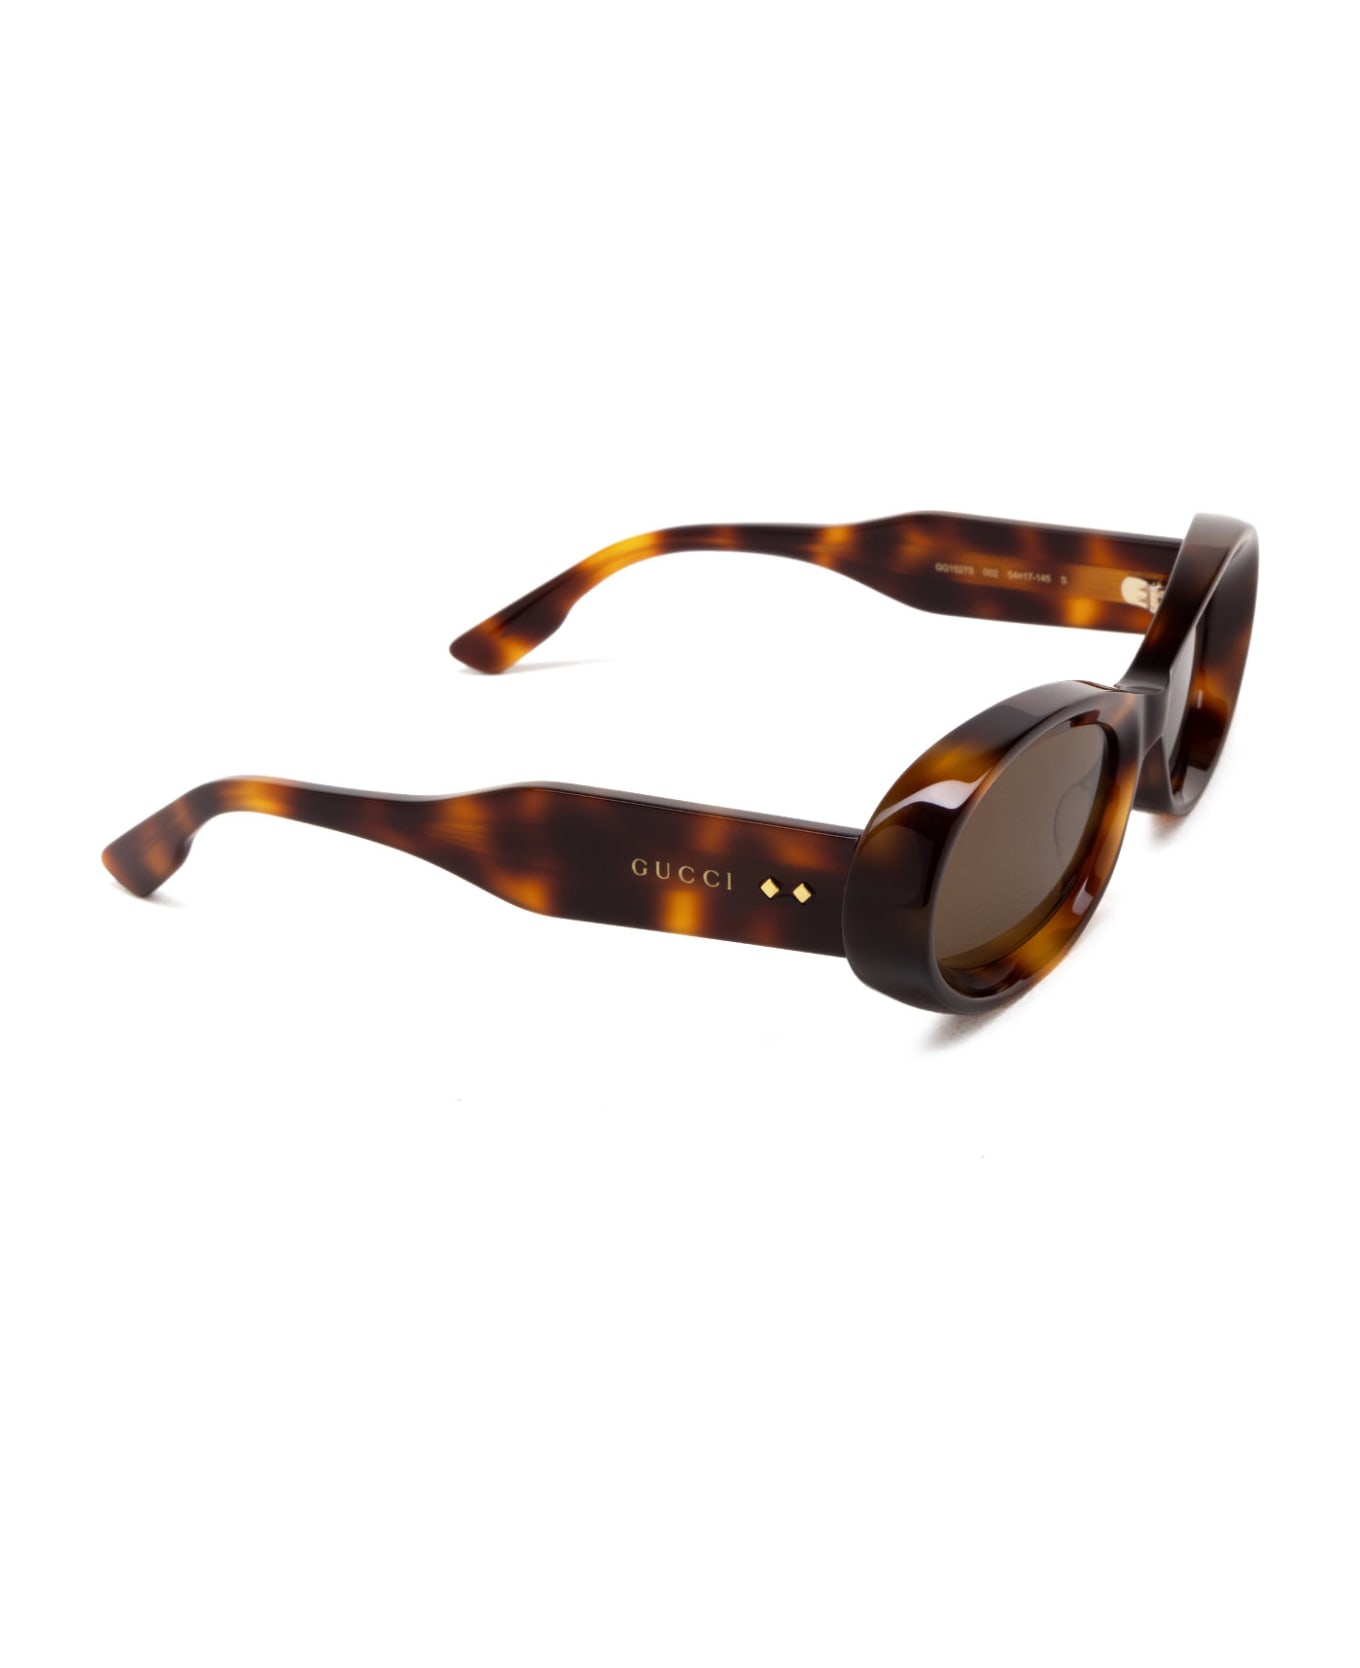 Gucci Eyewear Gg1527s Havana Sunglasses - Havana